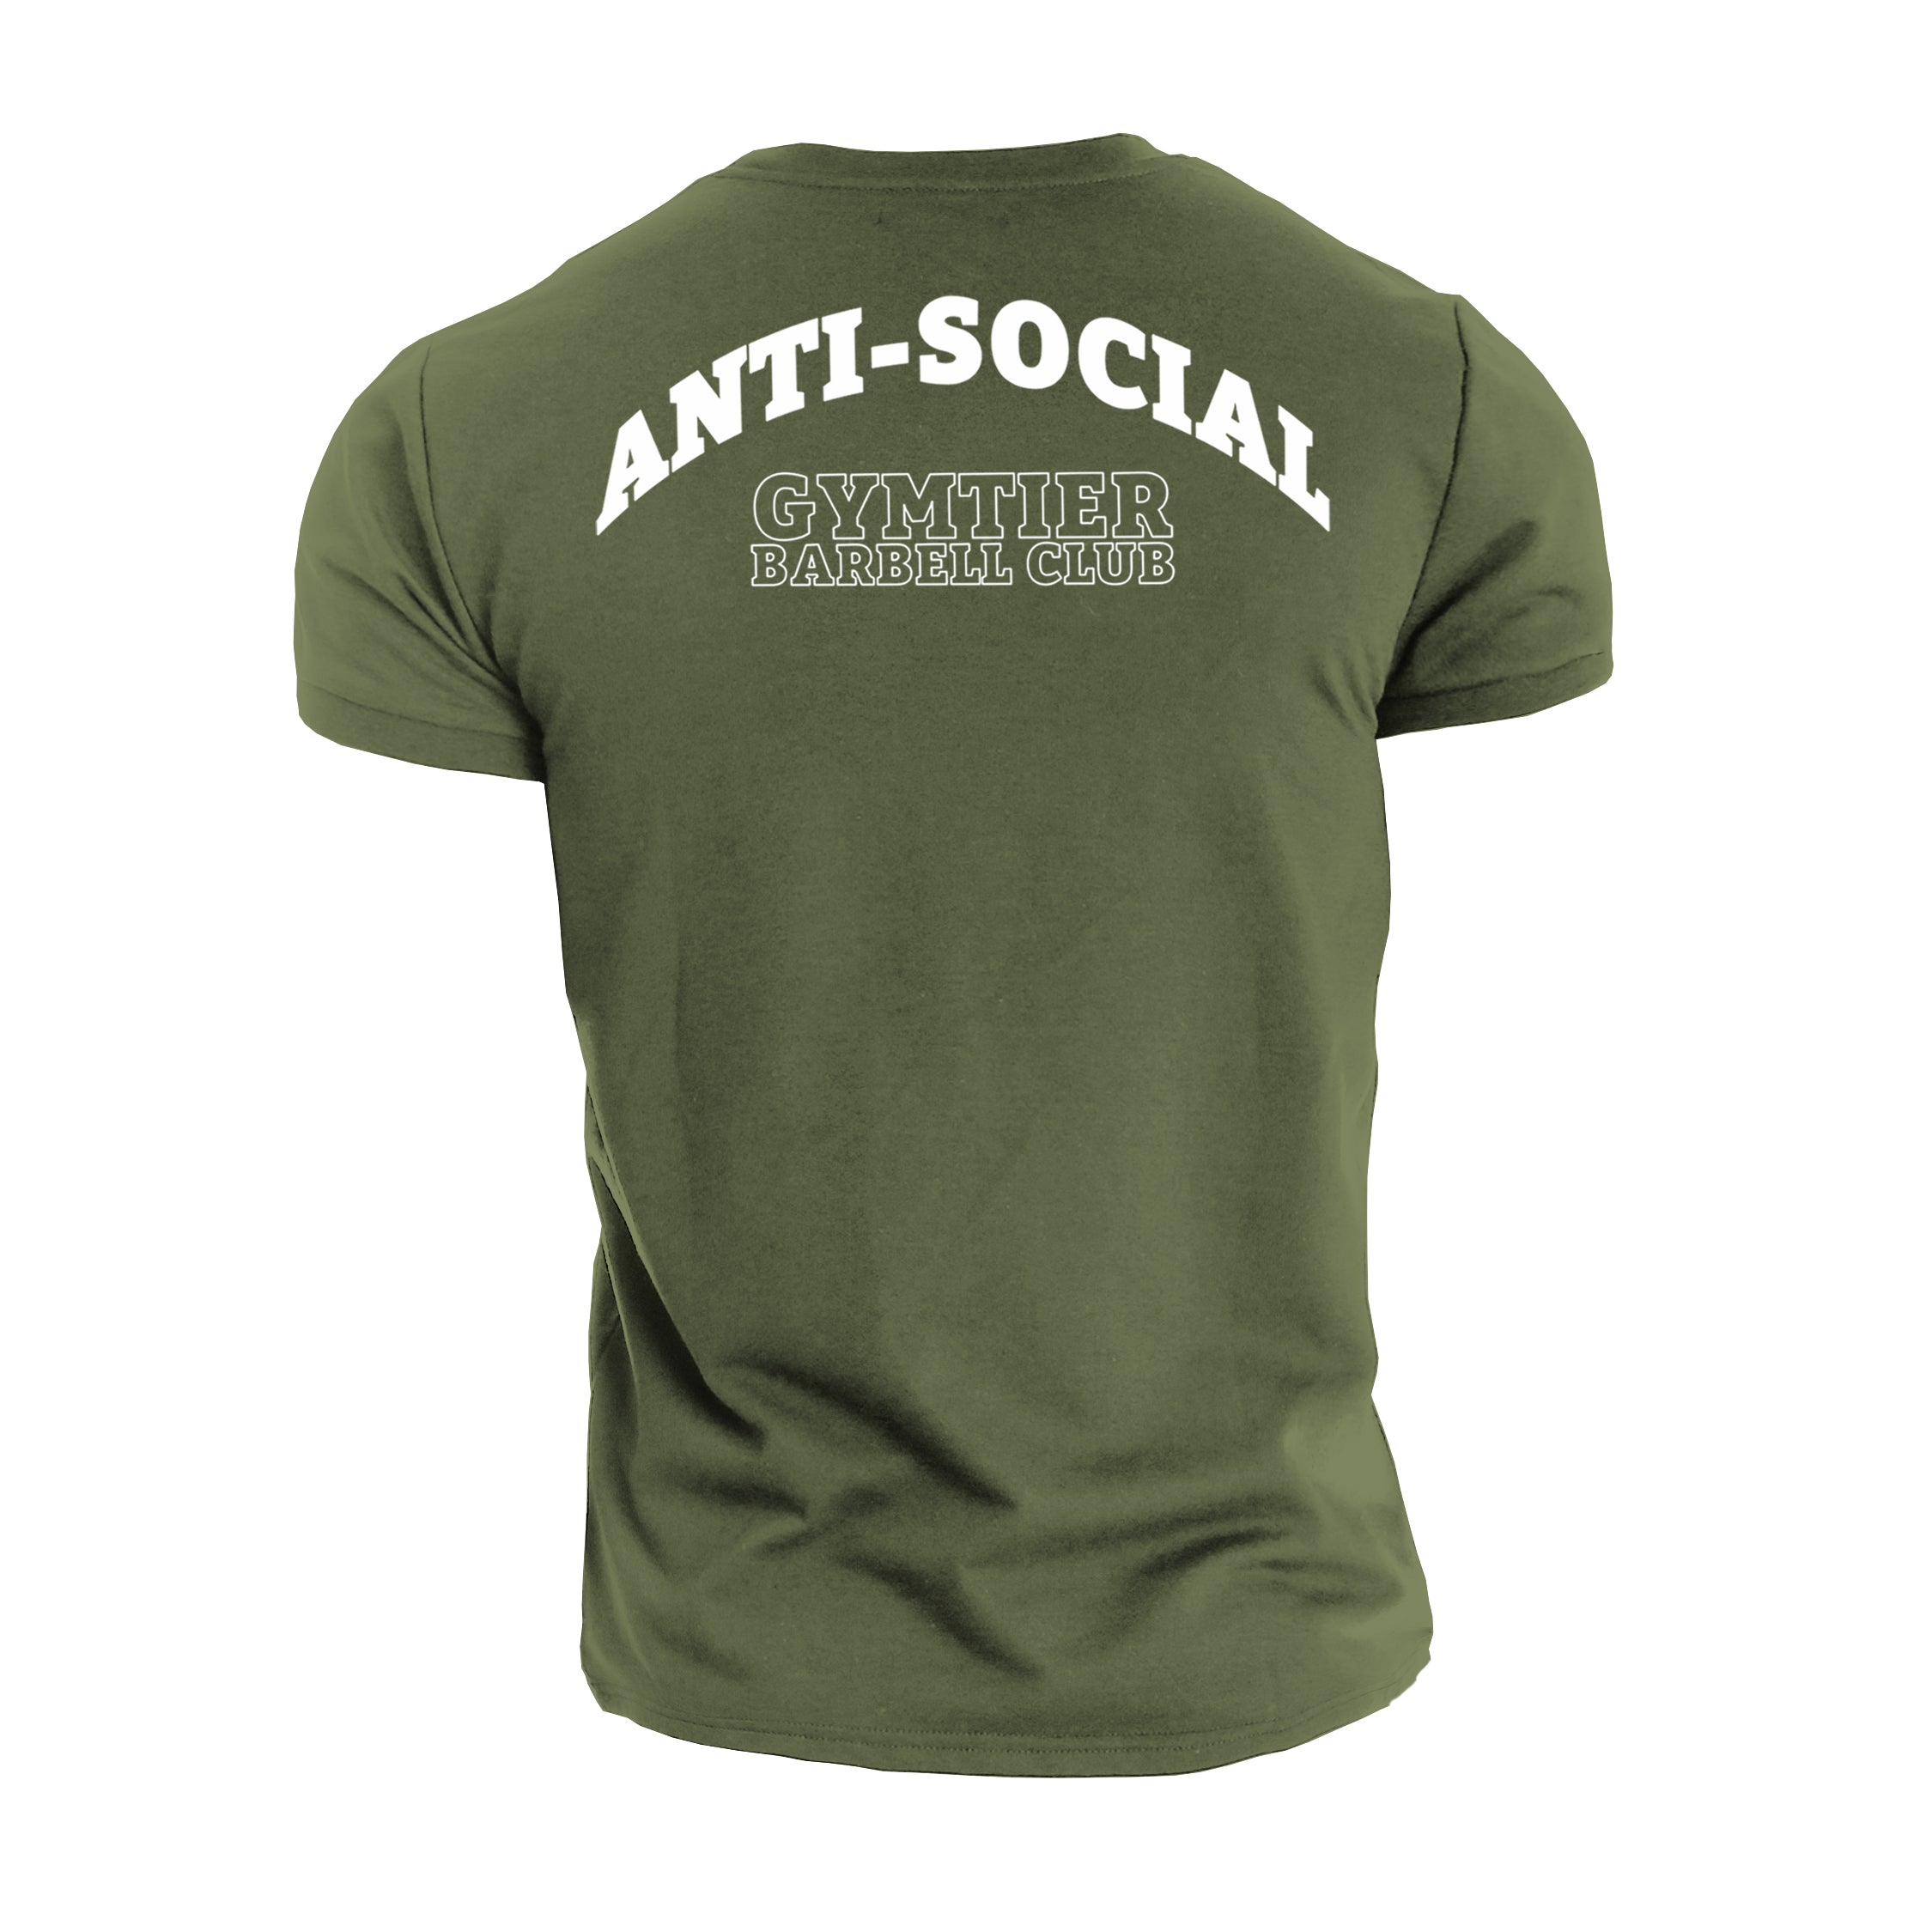 Gymtier Barbell Club - Anti-Social - Gym T-Shirt